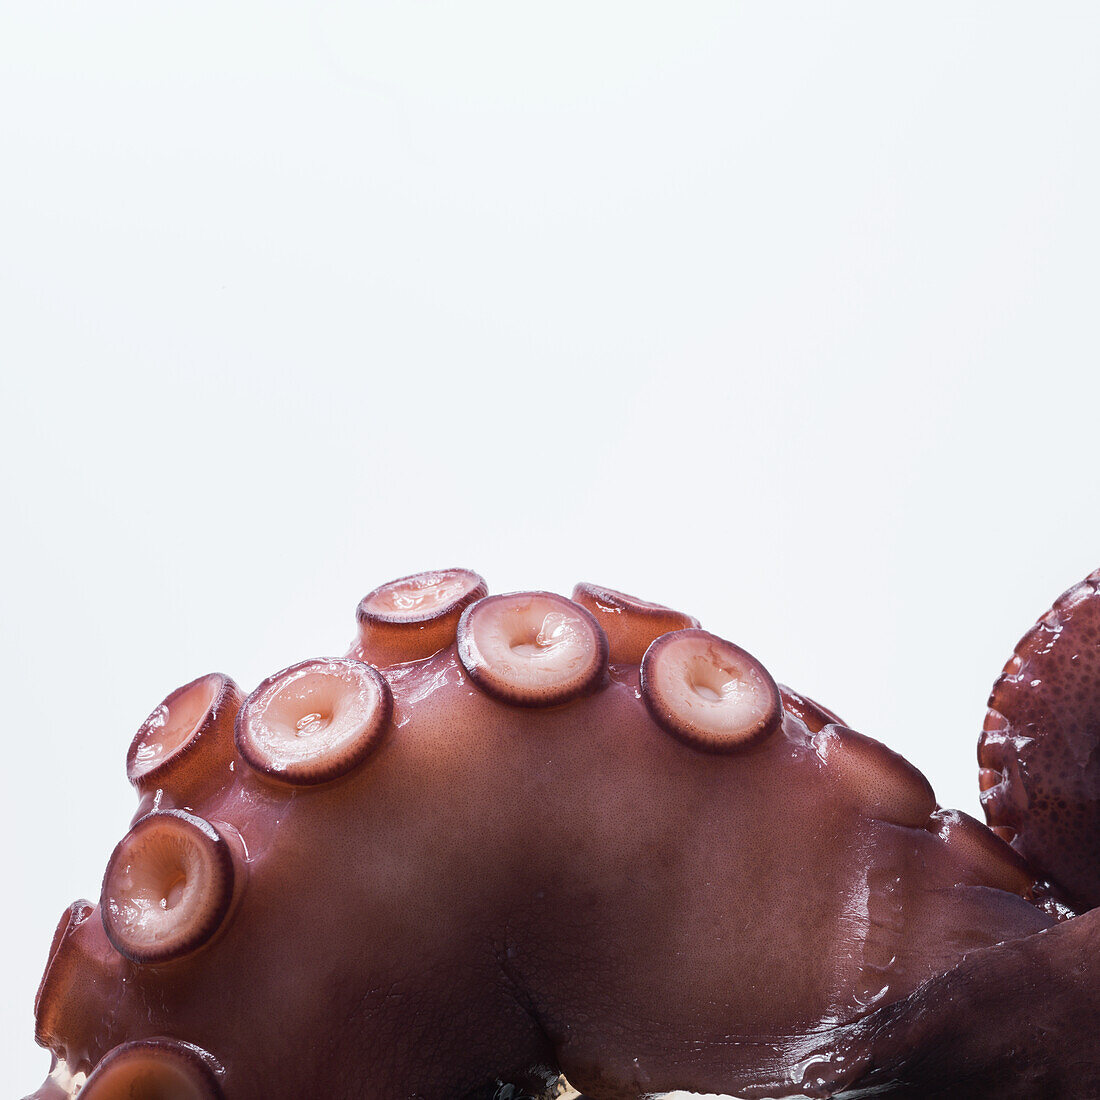 Octopus tentacles (close-up)